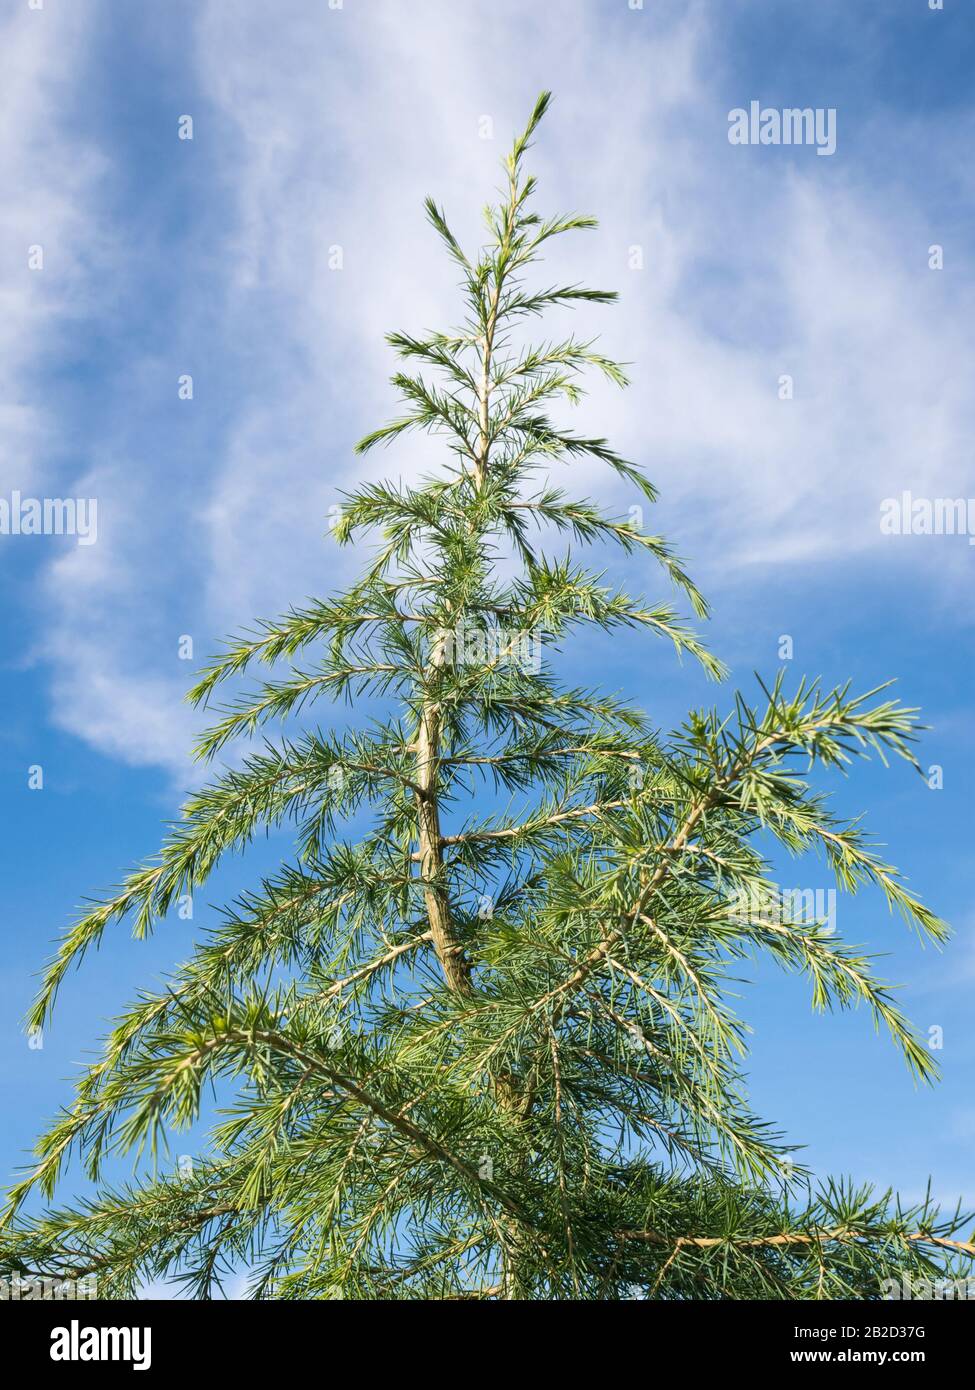 Top of Deodar Cedar (Cedrus deodara) or Himalayan cedar in an urban garden Stock Photo